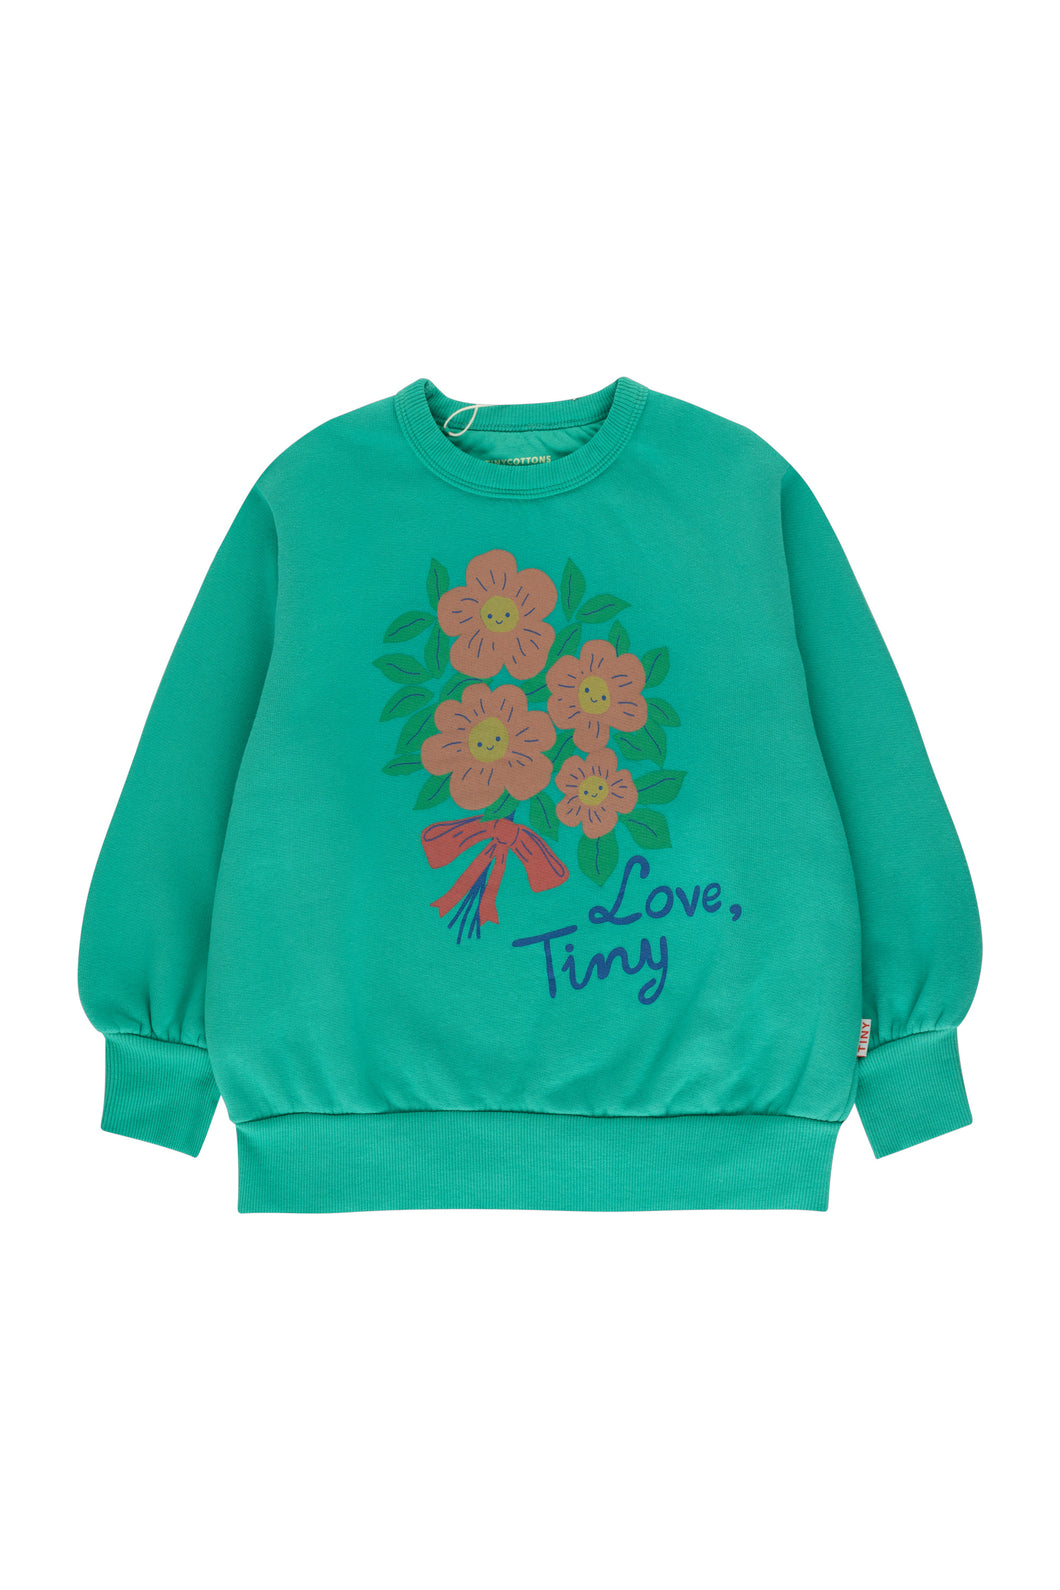 Tinycottons / KID / Love Flowers Sweatshirt / Emerald